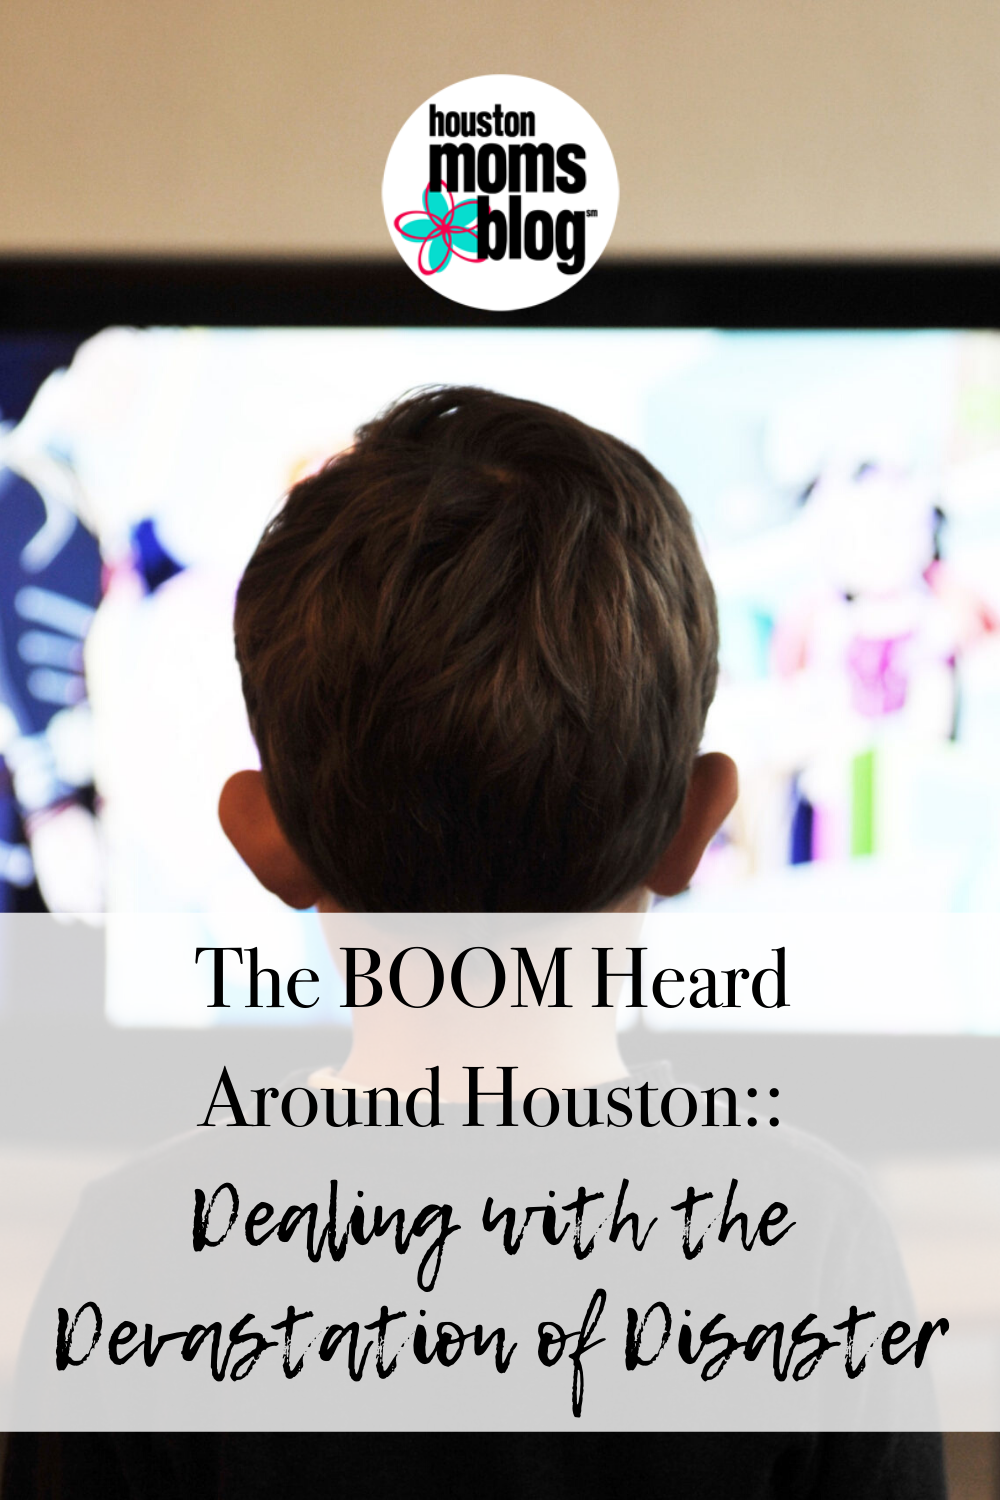 Houston Moms Blog "The BOOM Heard Around Houston:: Dealing with the Devastation of Disaster" #houstonmomsblog #momsaroundhouston